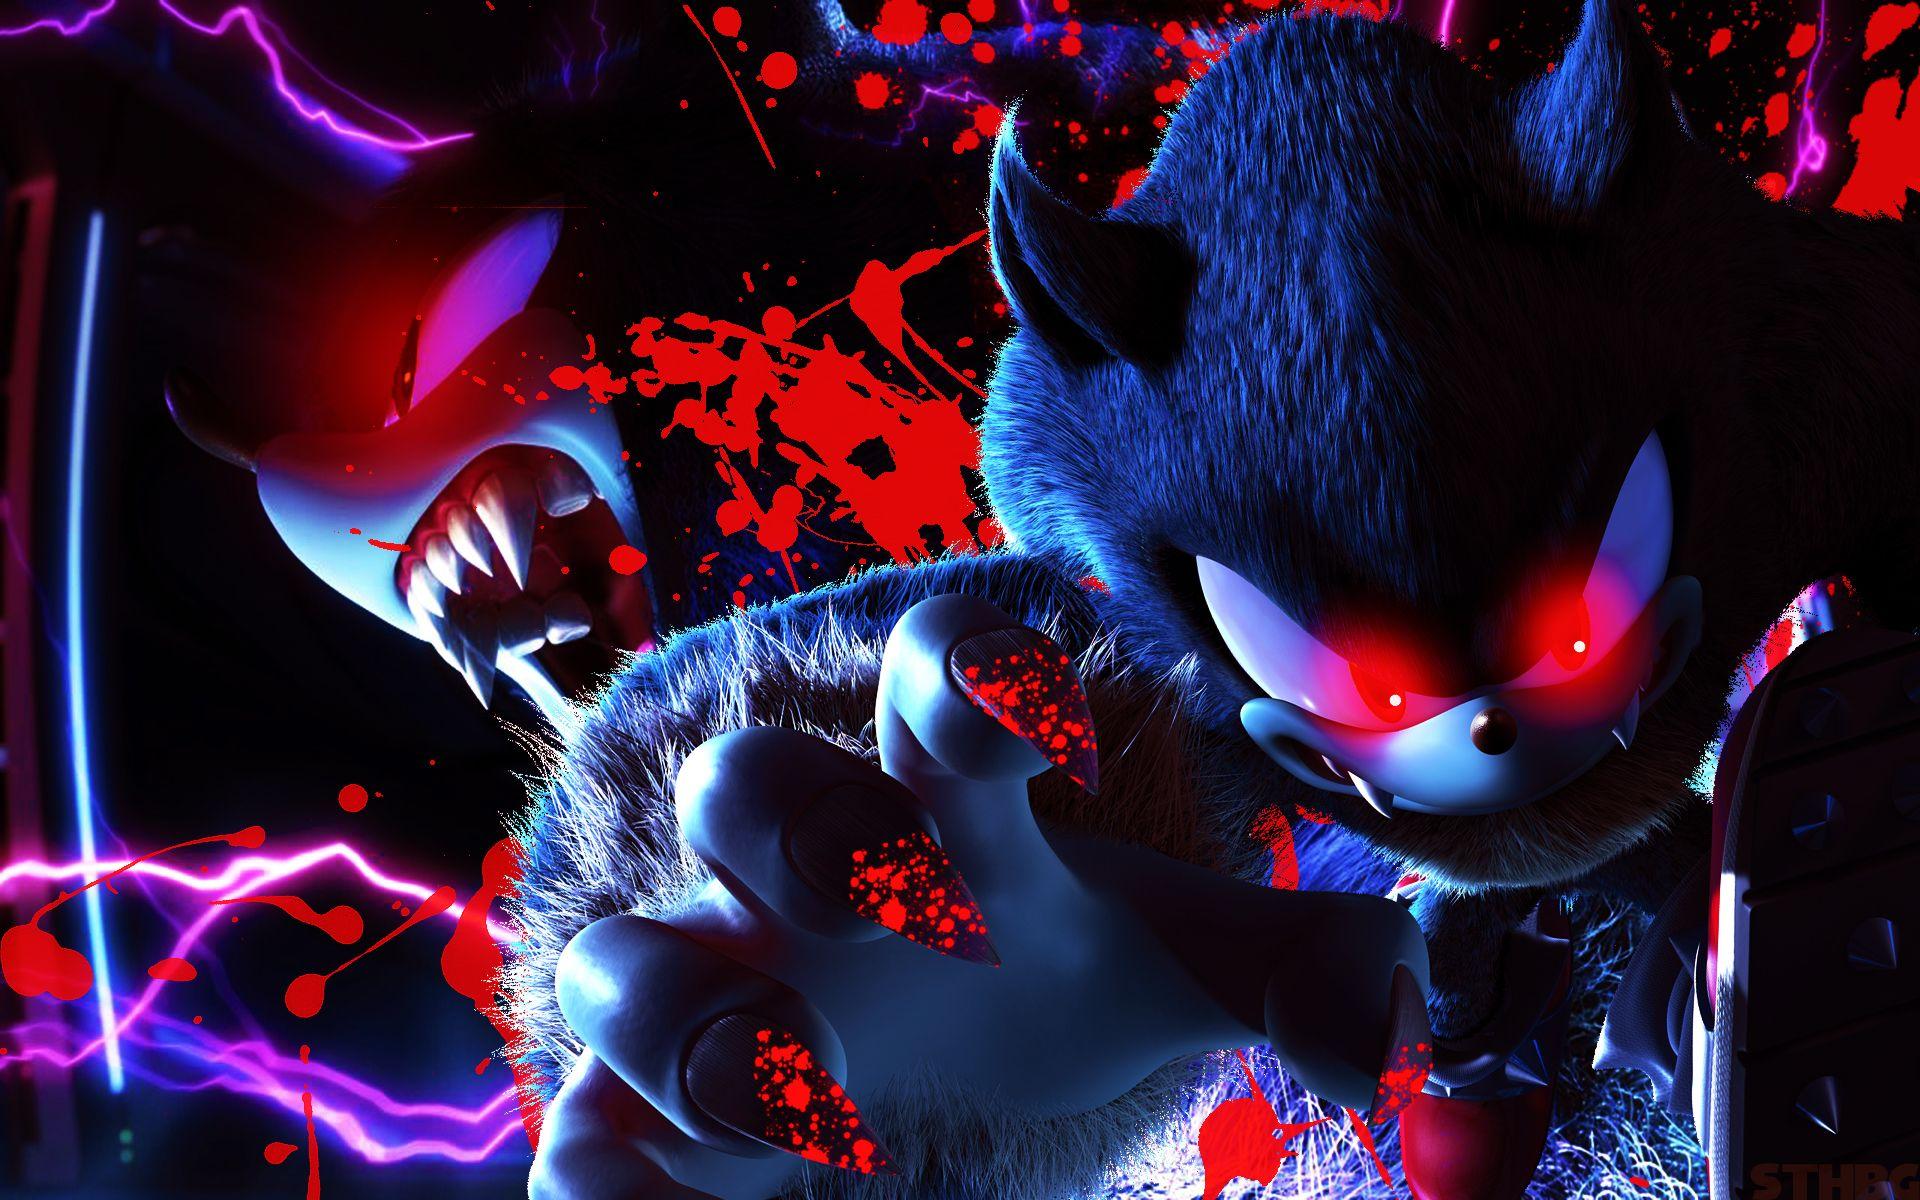 Hyper Sonic Wp wallpaper by BlackSega - Download on ZEDGE™